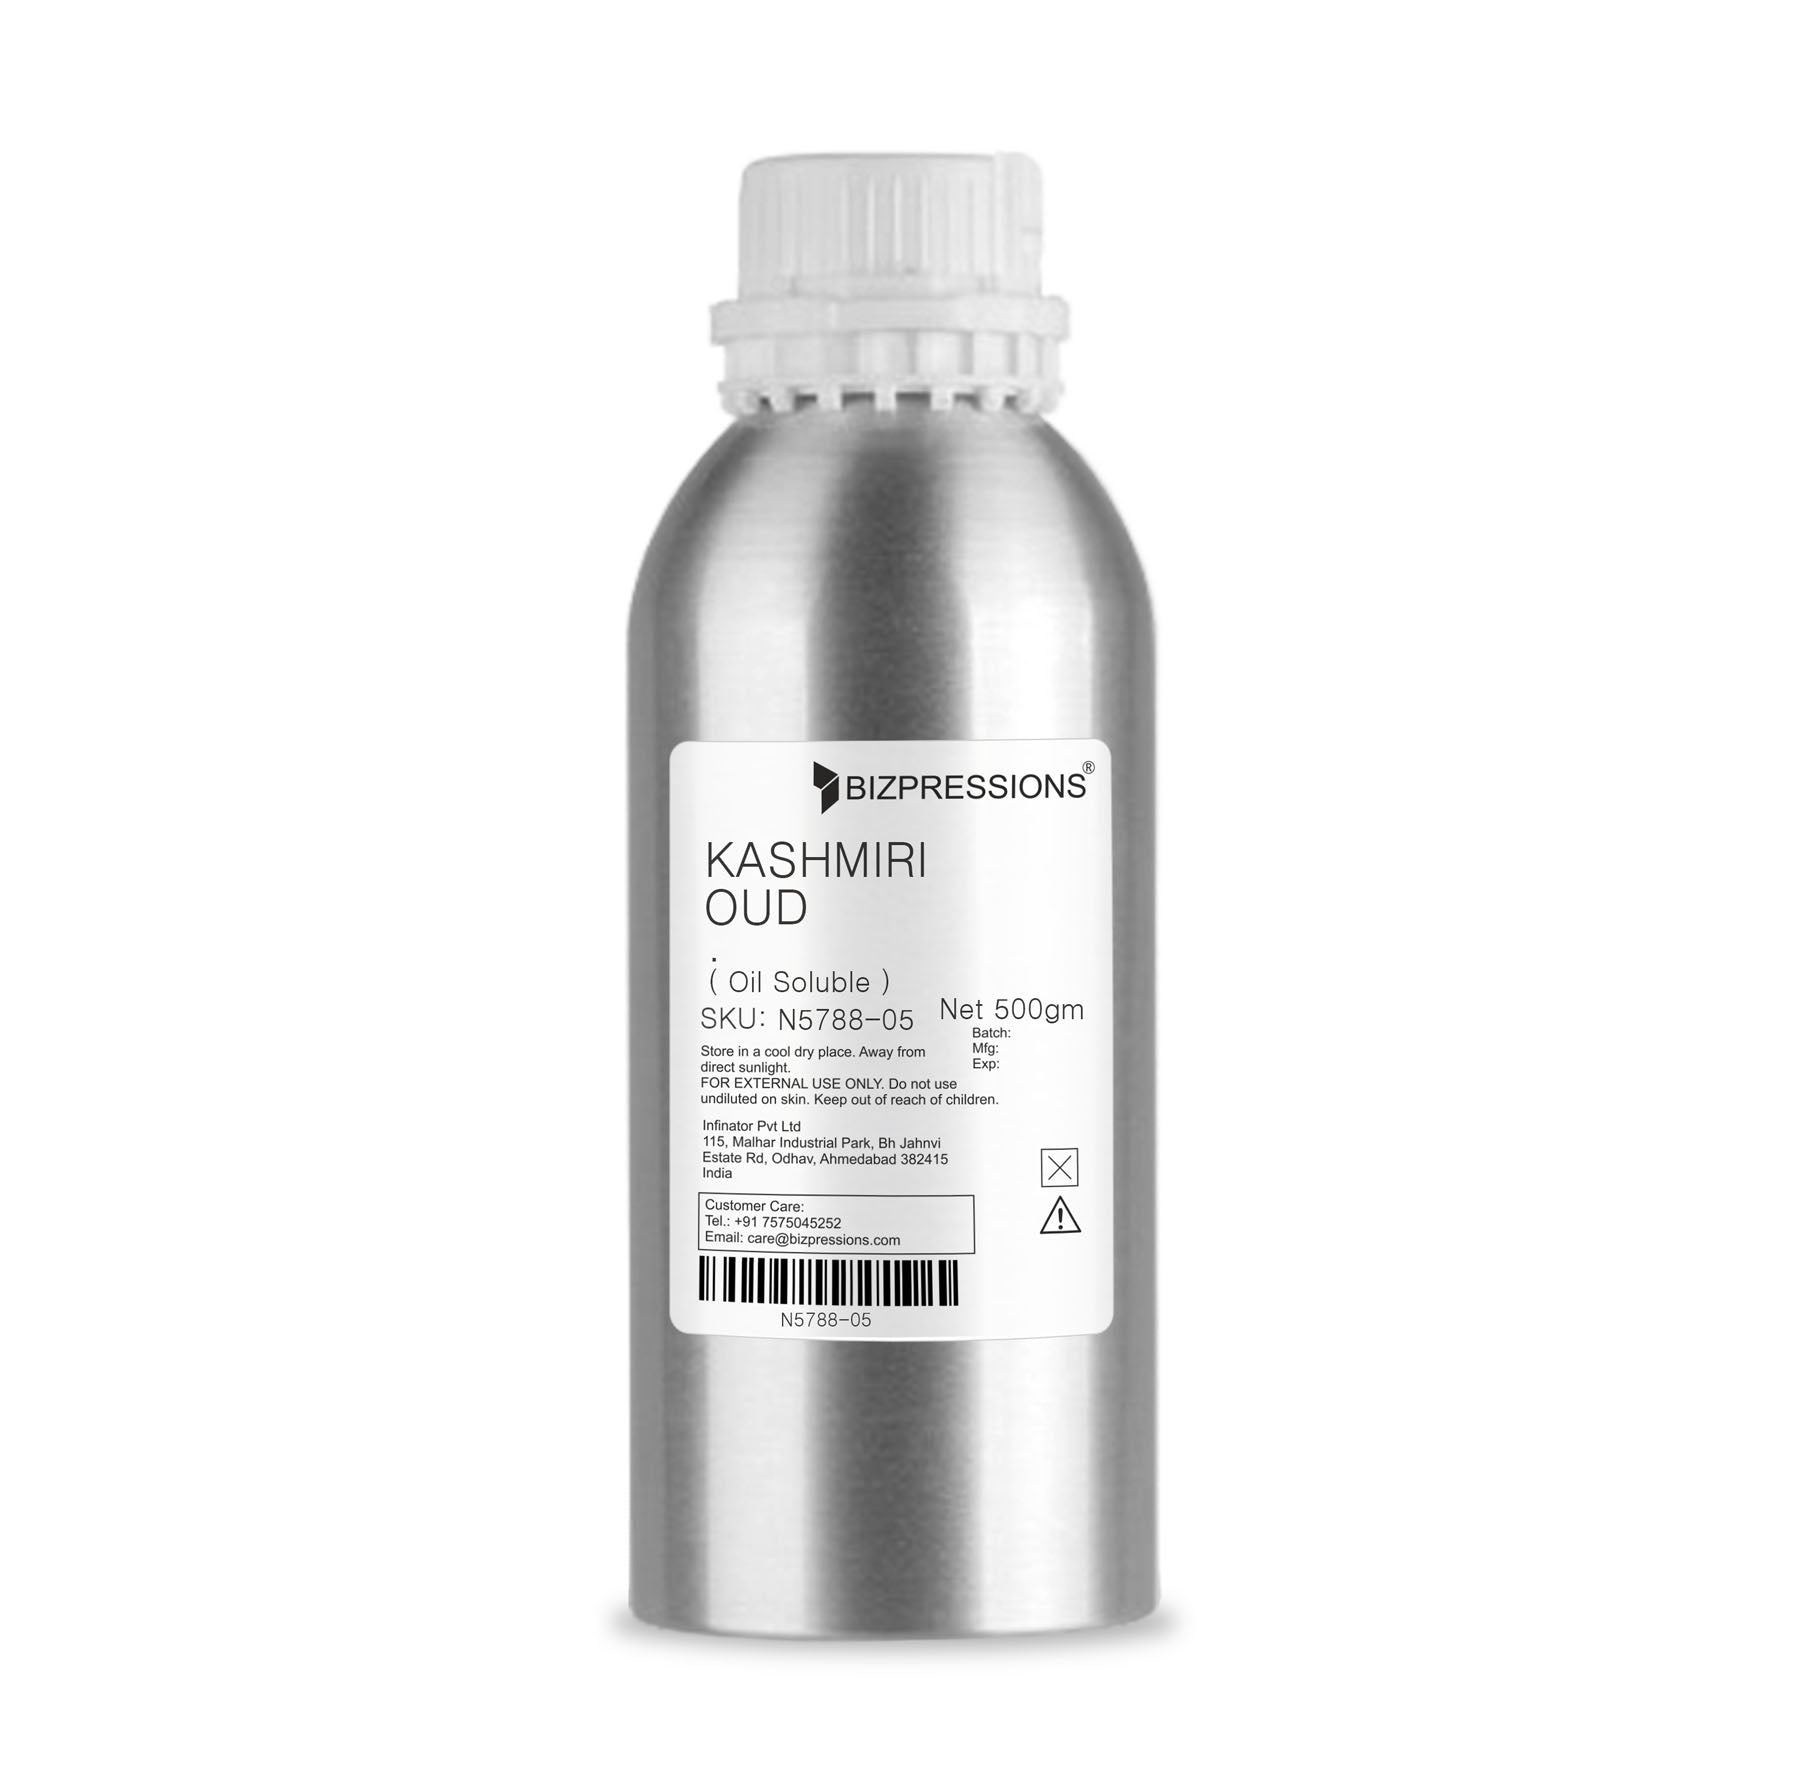 KASHMIRI OUD - Fragrance ( Oil Soluble ) - 500 gm